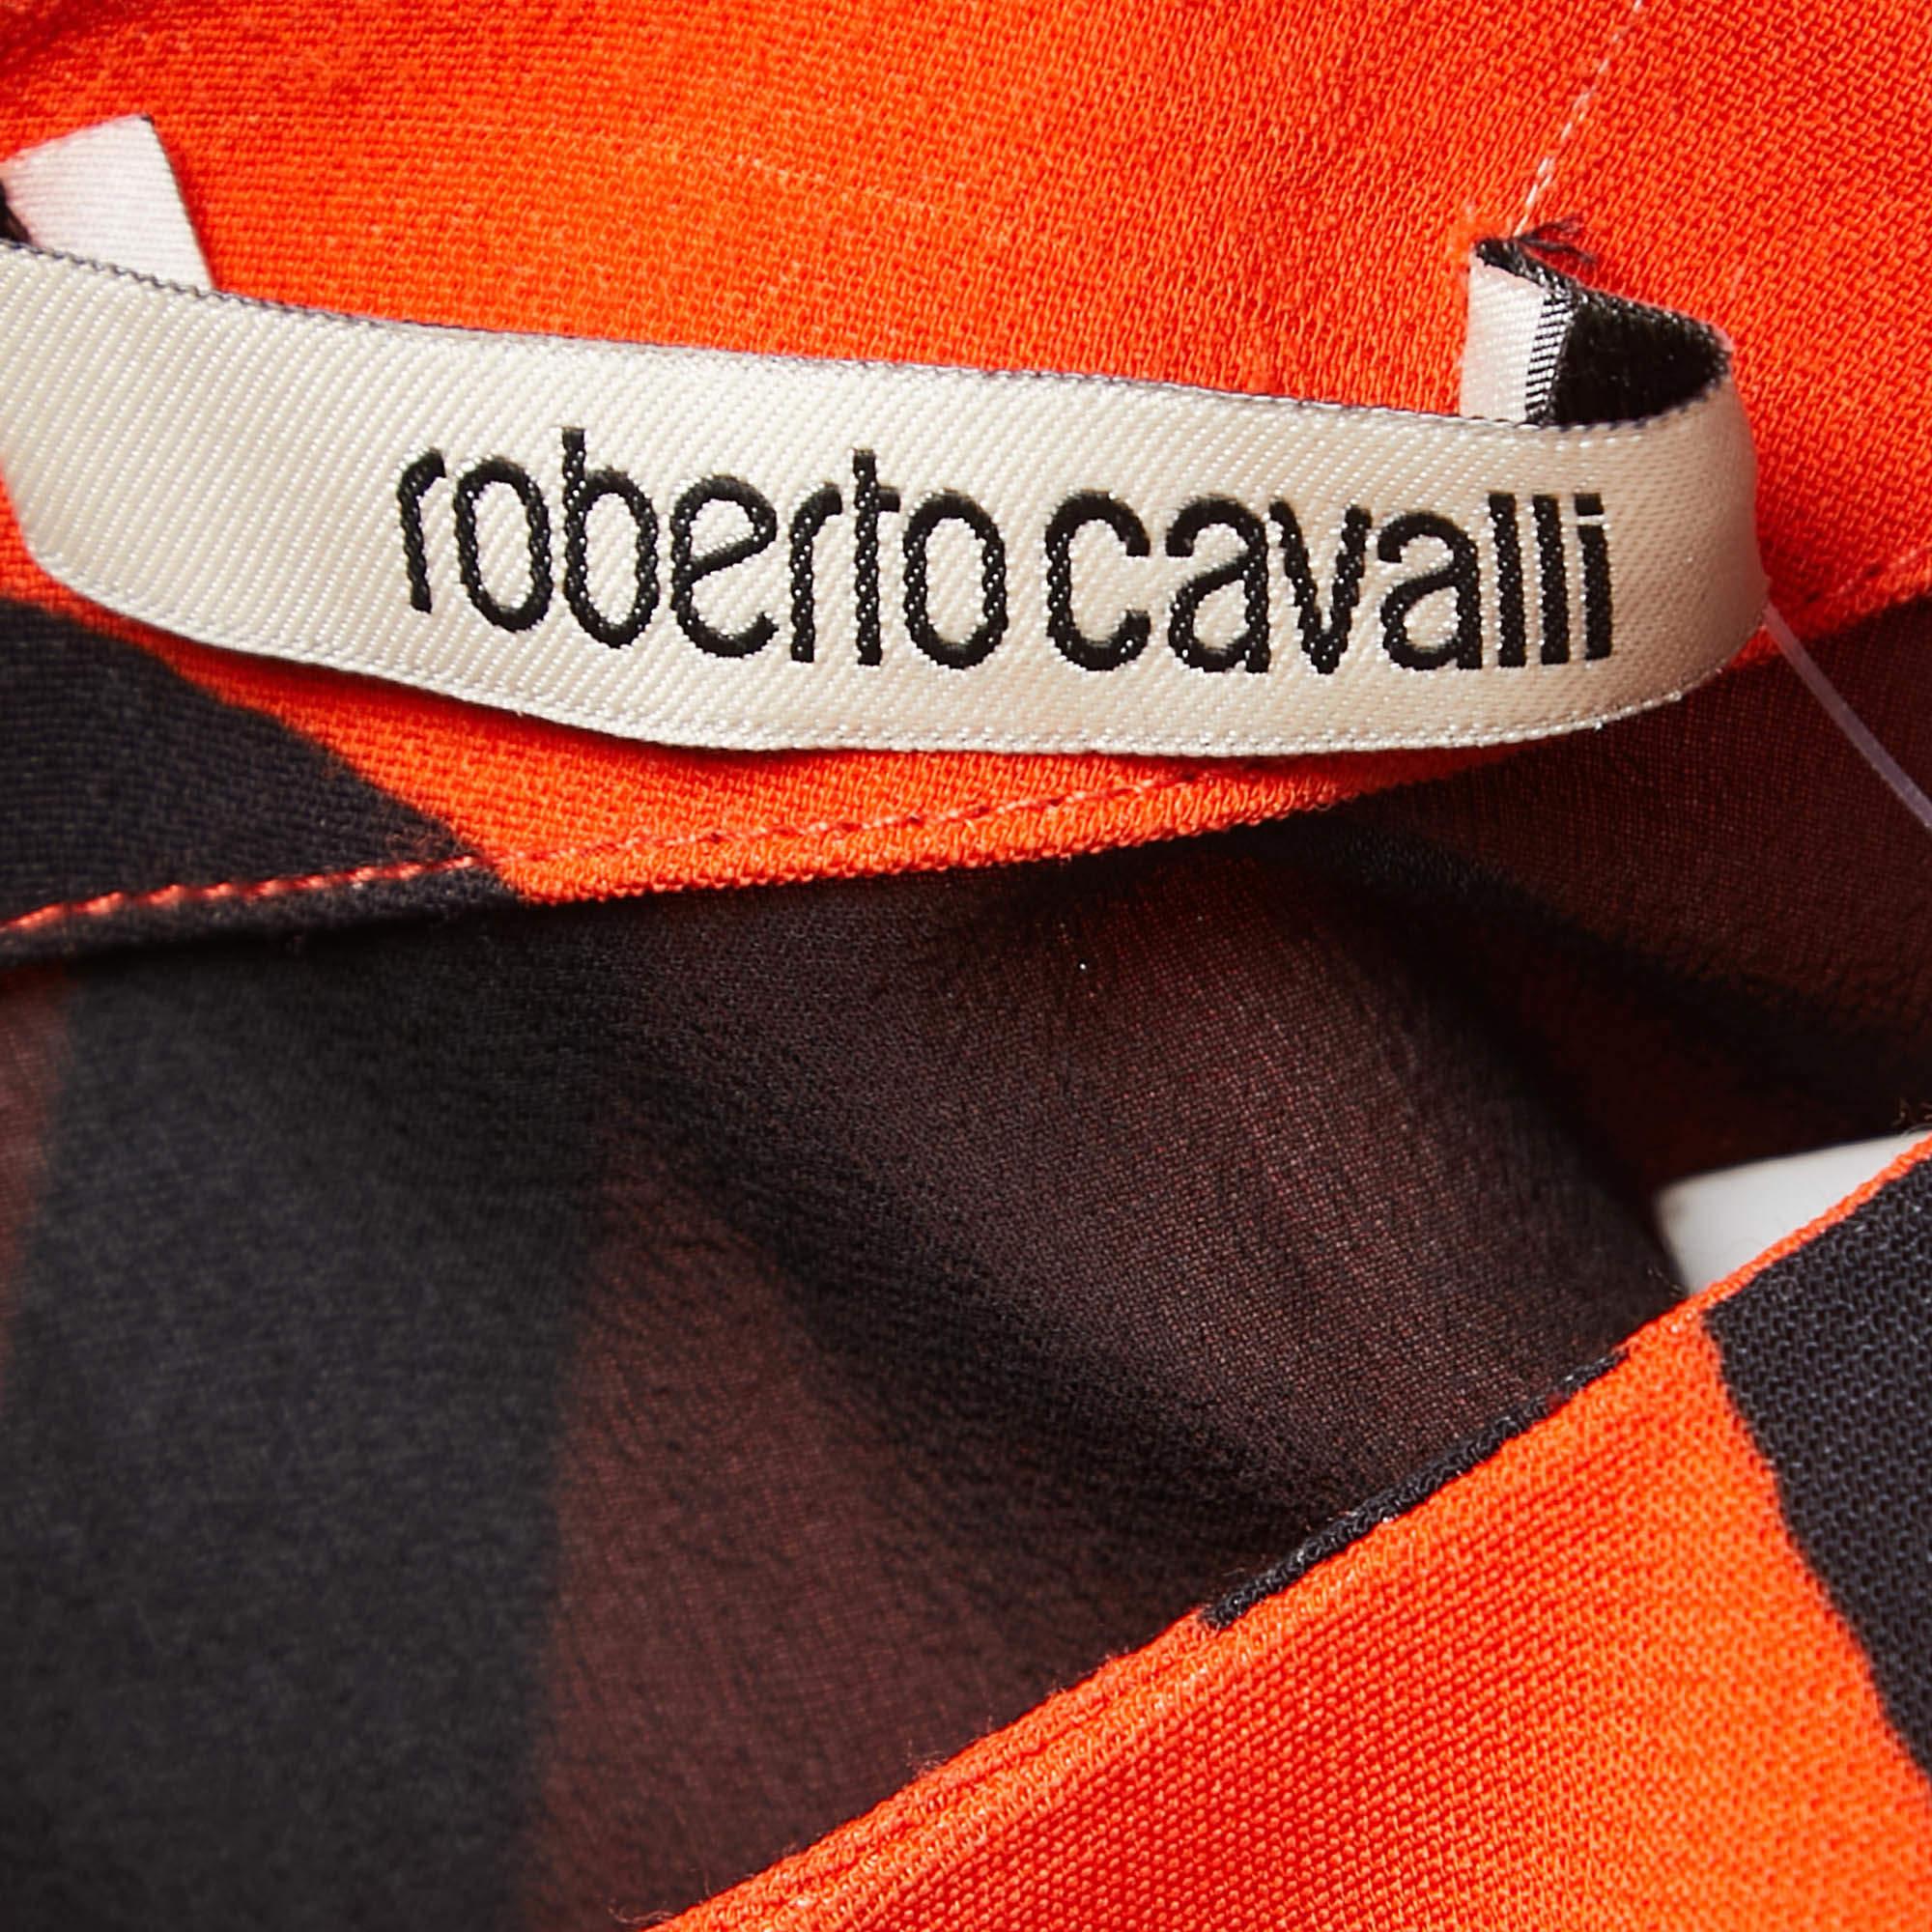 Roberto Cavalli Orange Animal Printed Full Sleeve Draped Asymmetrical Dress S 2